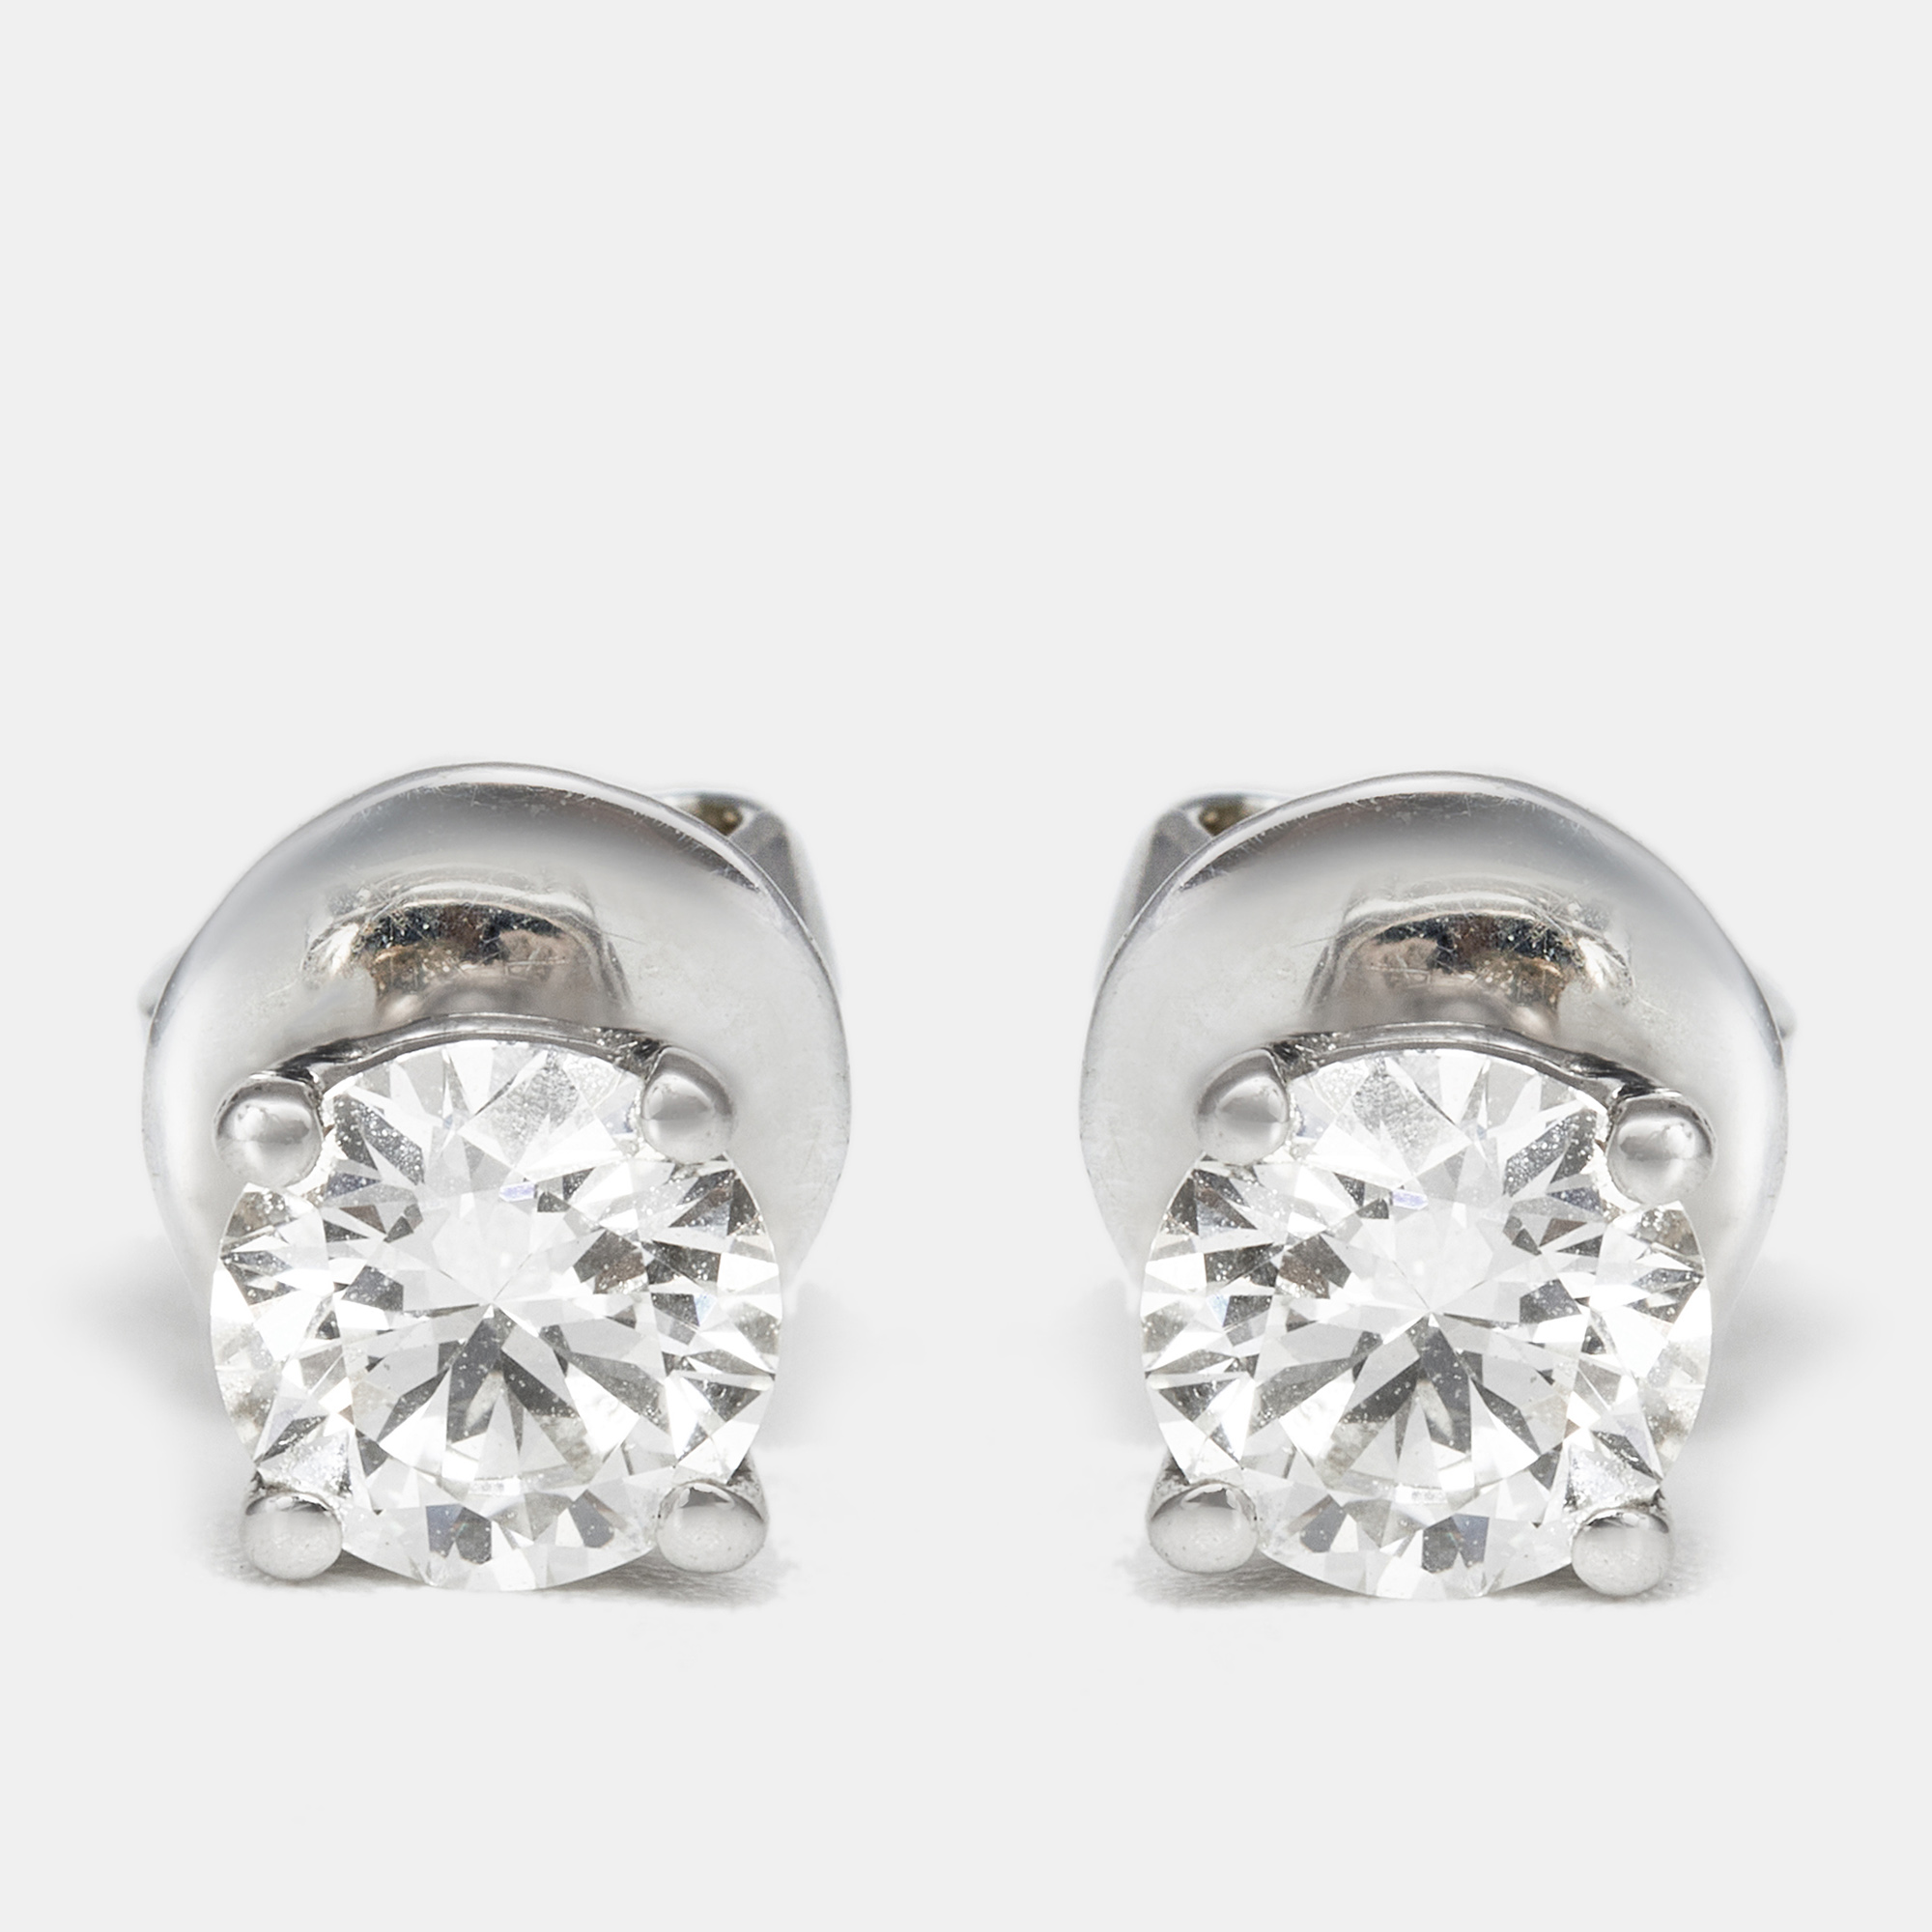 The diamond edit daily wear elegant solitaire diamonds (0.60 ct) 18k white gold stud earrings